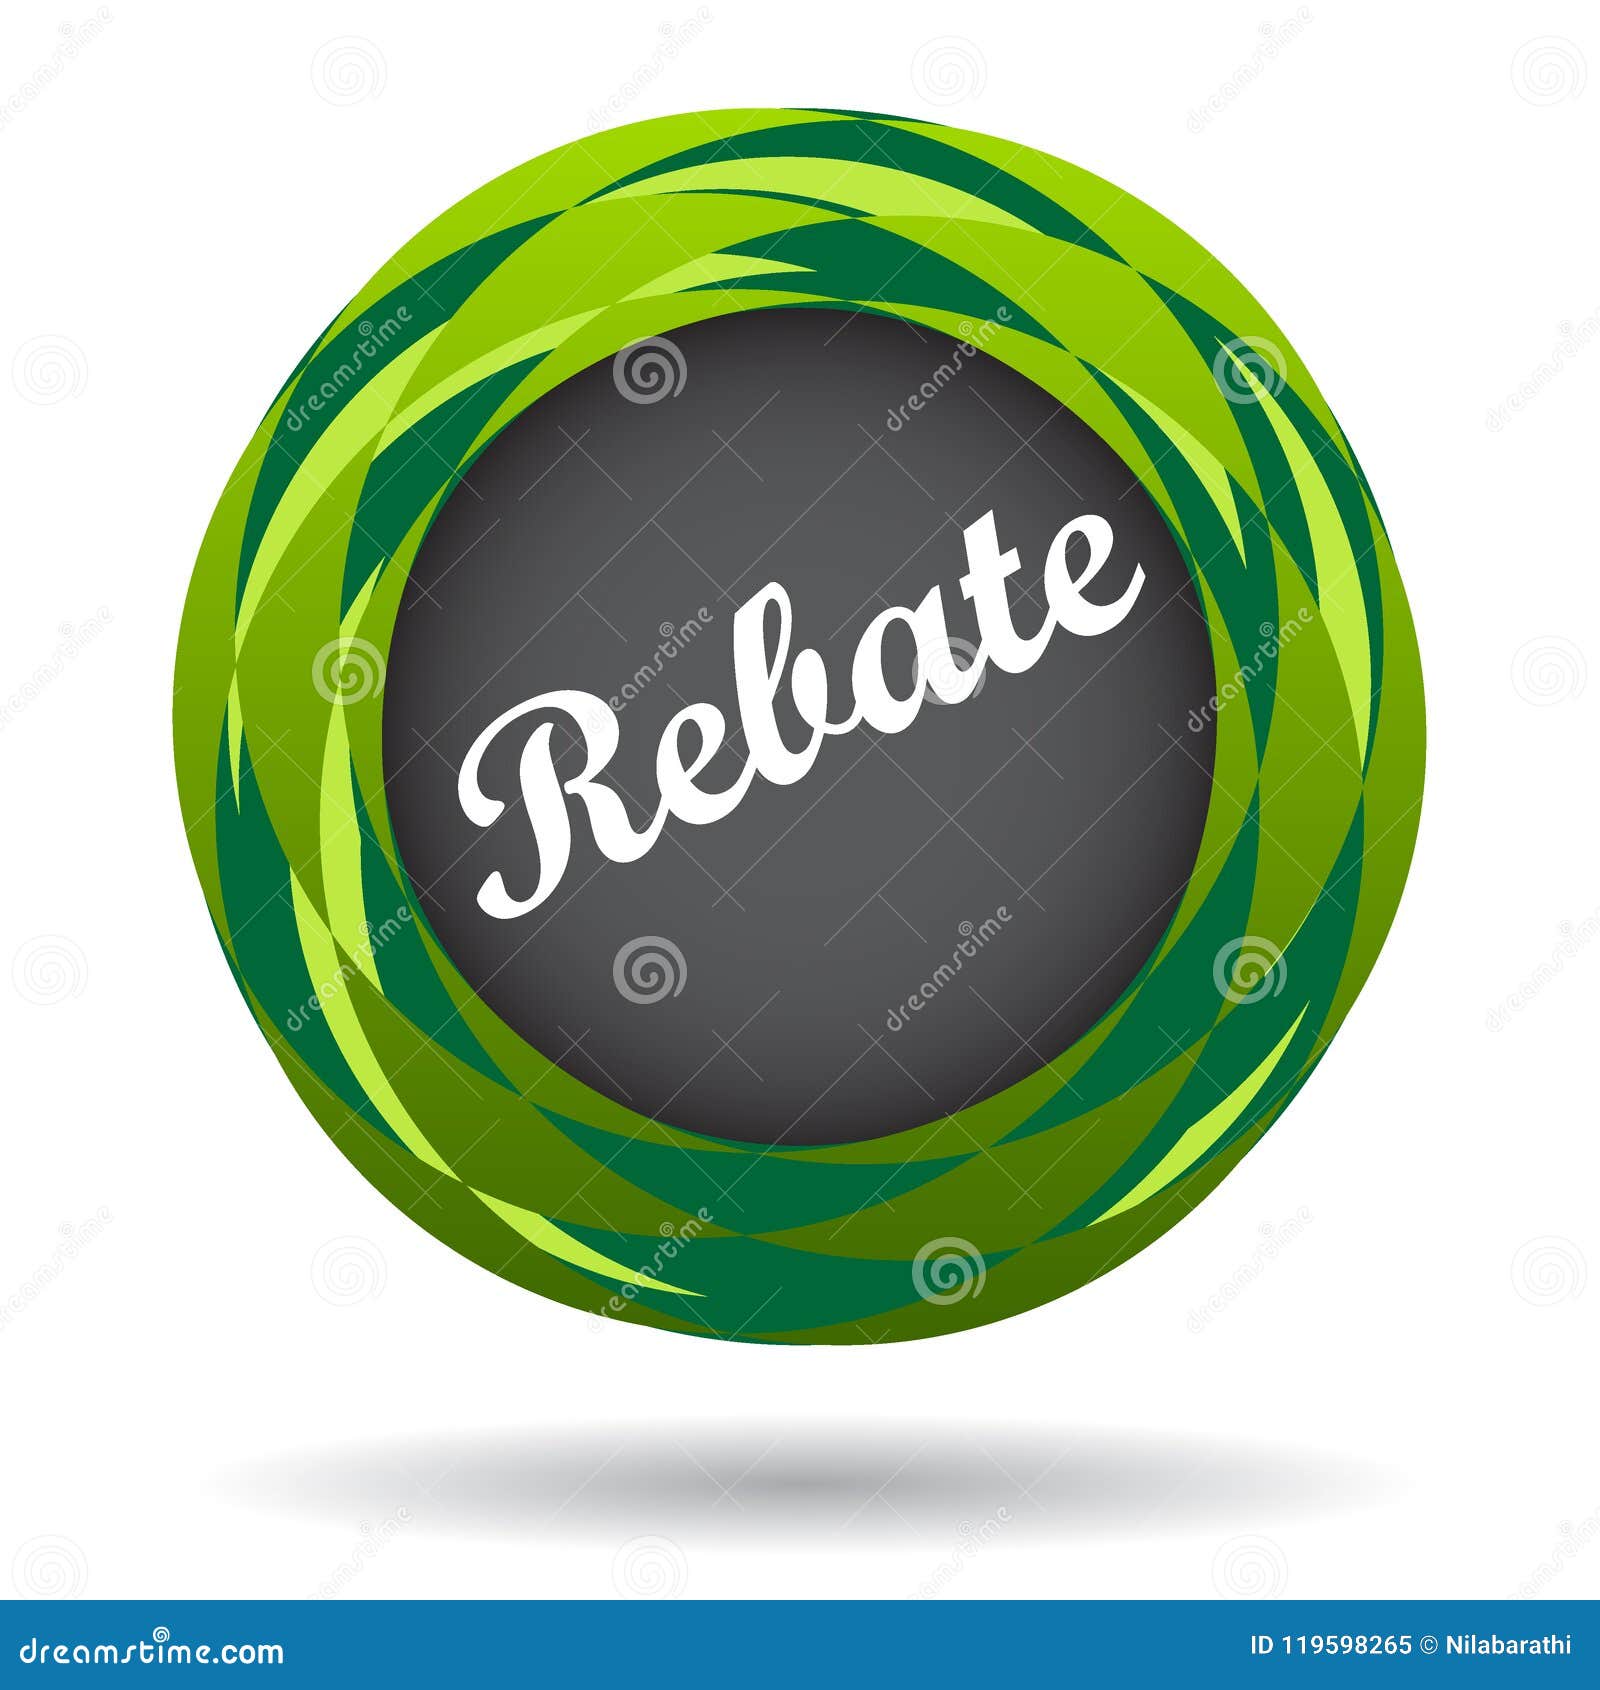 rebate-colorful-icon-stock-illustration-illustration-of-icon-119598265